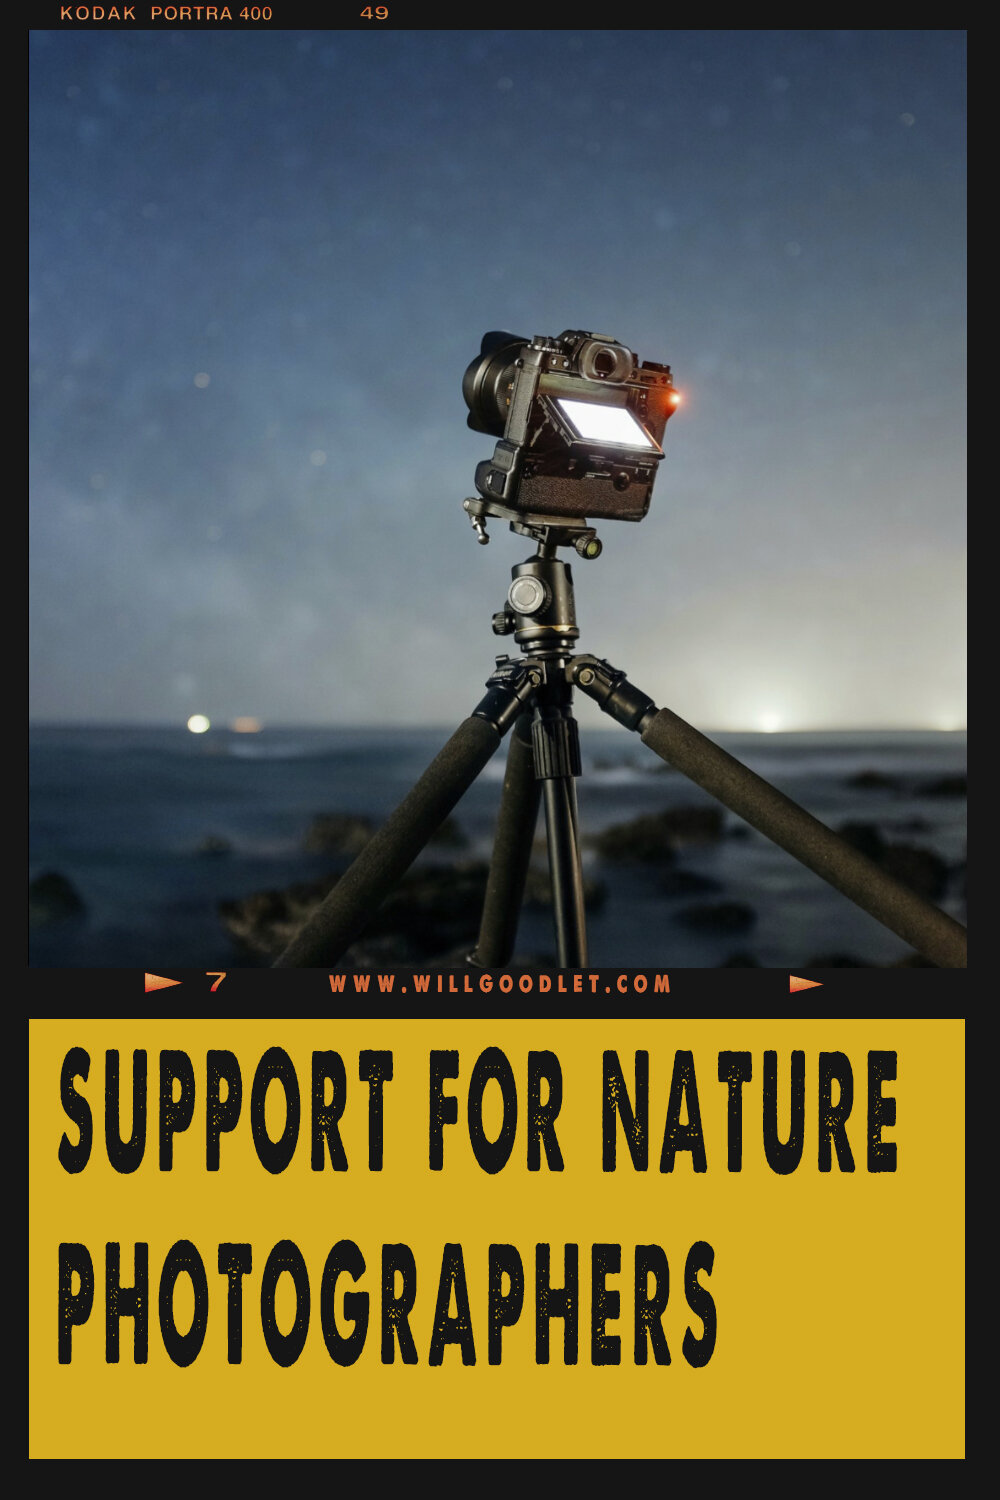 Van komfort Port Tripods & Support for Nature Photographers